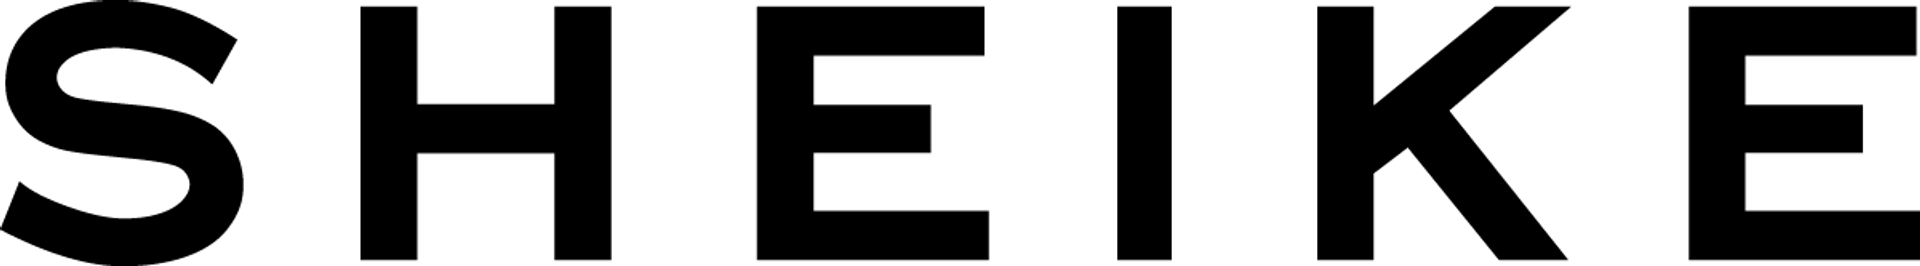 SHEIKE logo of current catalogue